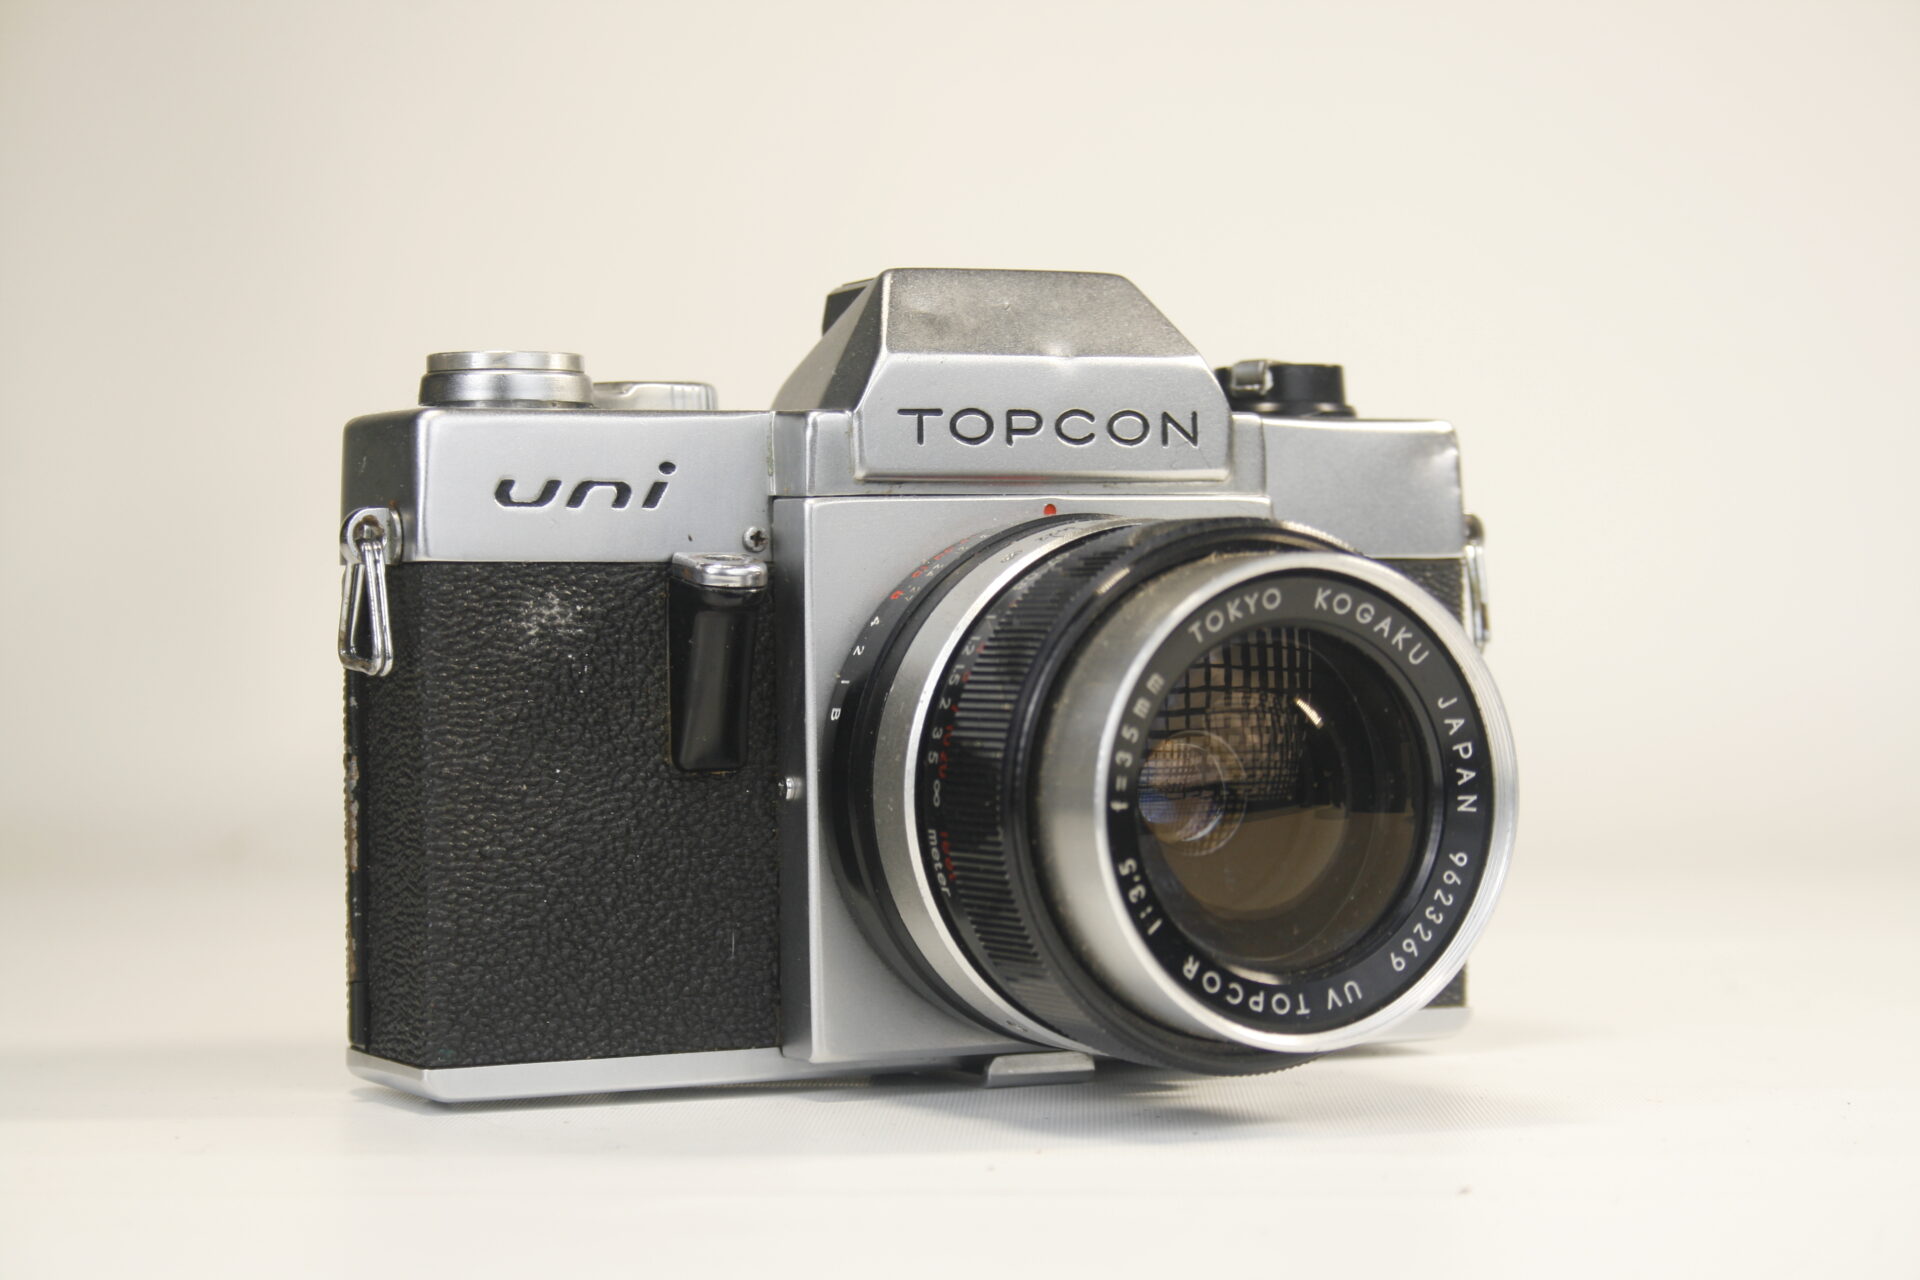 Topcon Uni. 35mm SLR camera. 1964. Japan